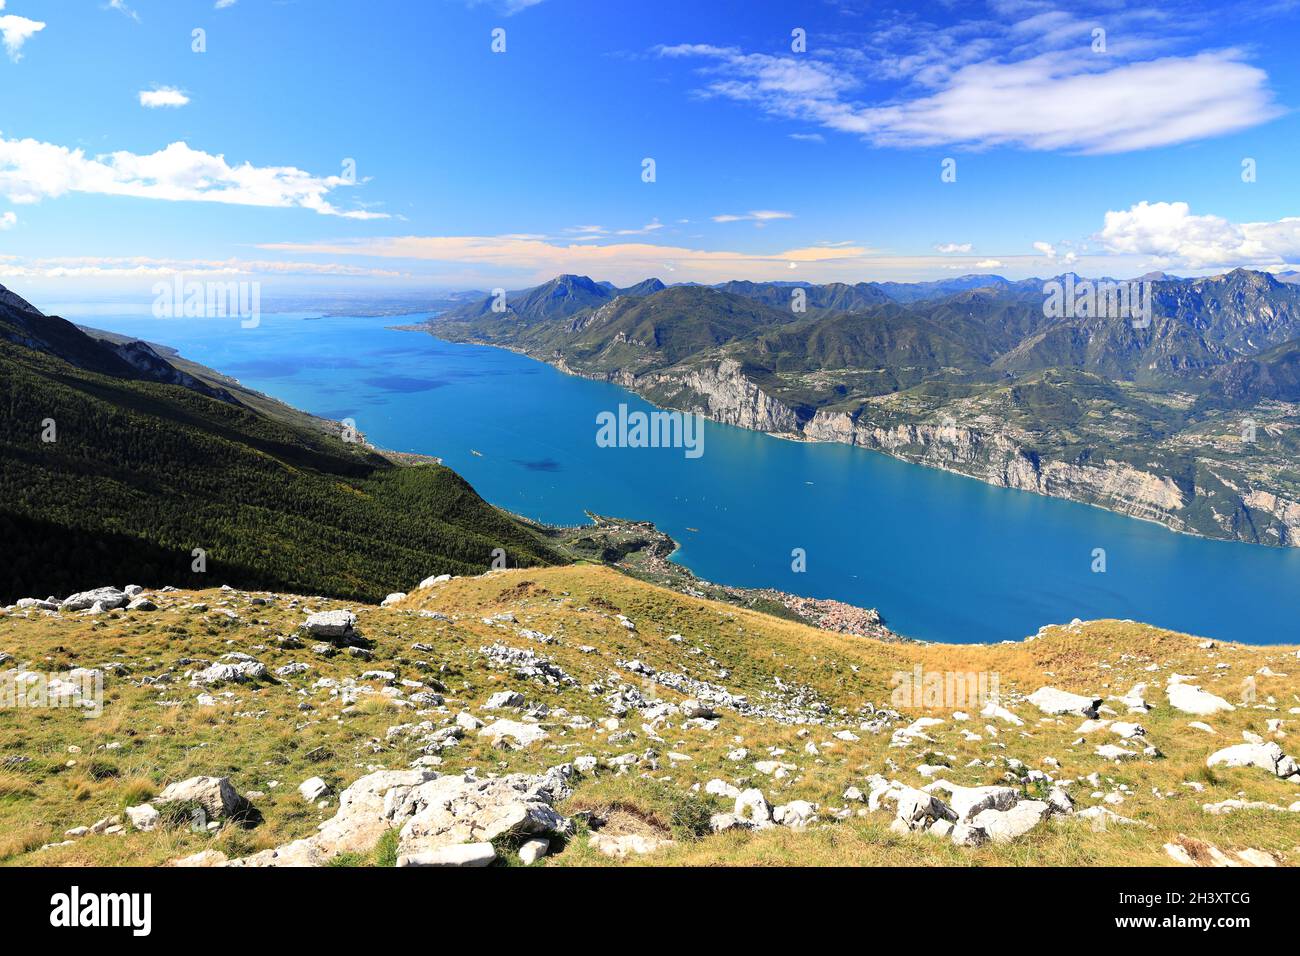 Mount Baldo overlooking Lake Garda in the Italian Alps. Europe. Stock Photo